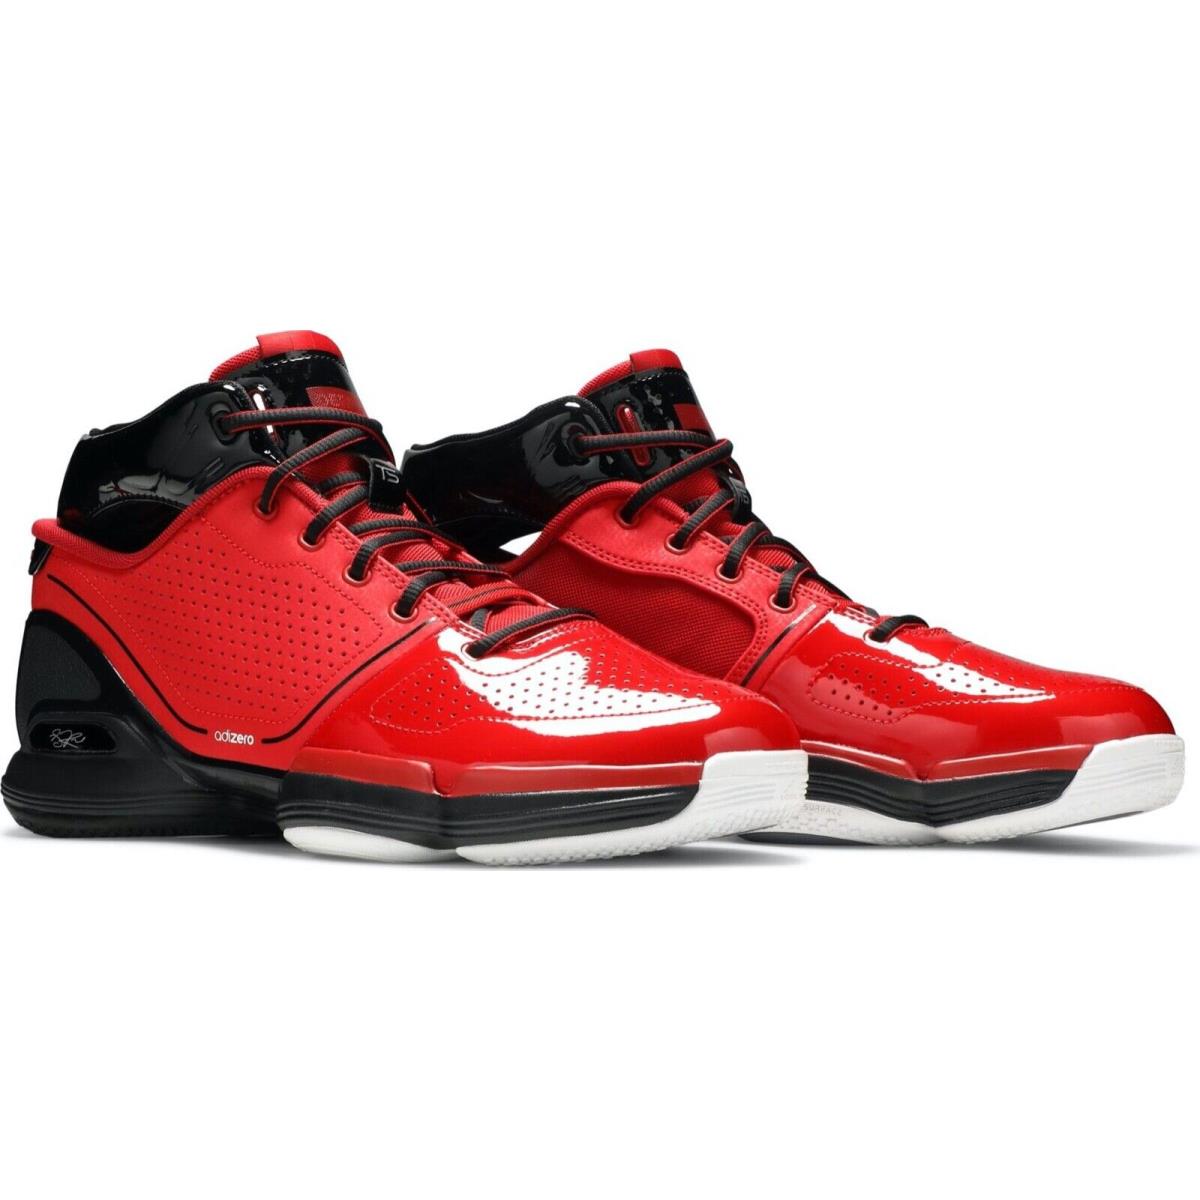 Adidas Adizero Rose 1 Basketball Shoe Men Sz 9.5 Red Scarlet White Black G57744